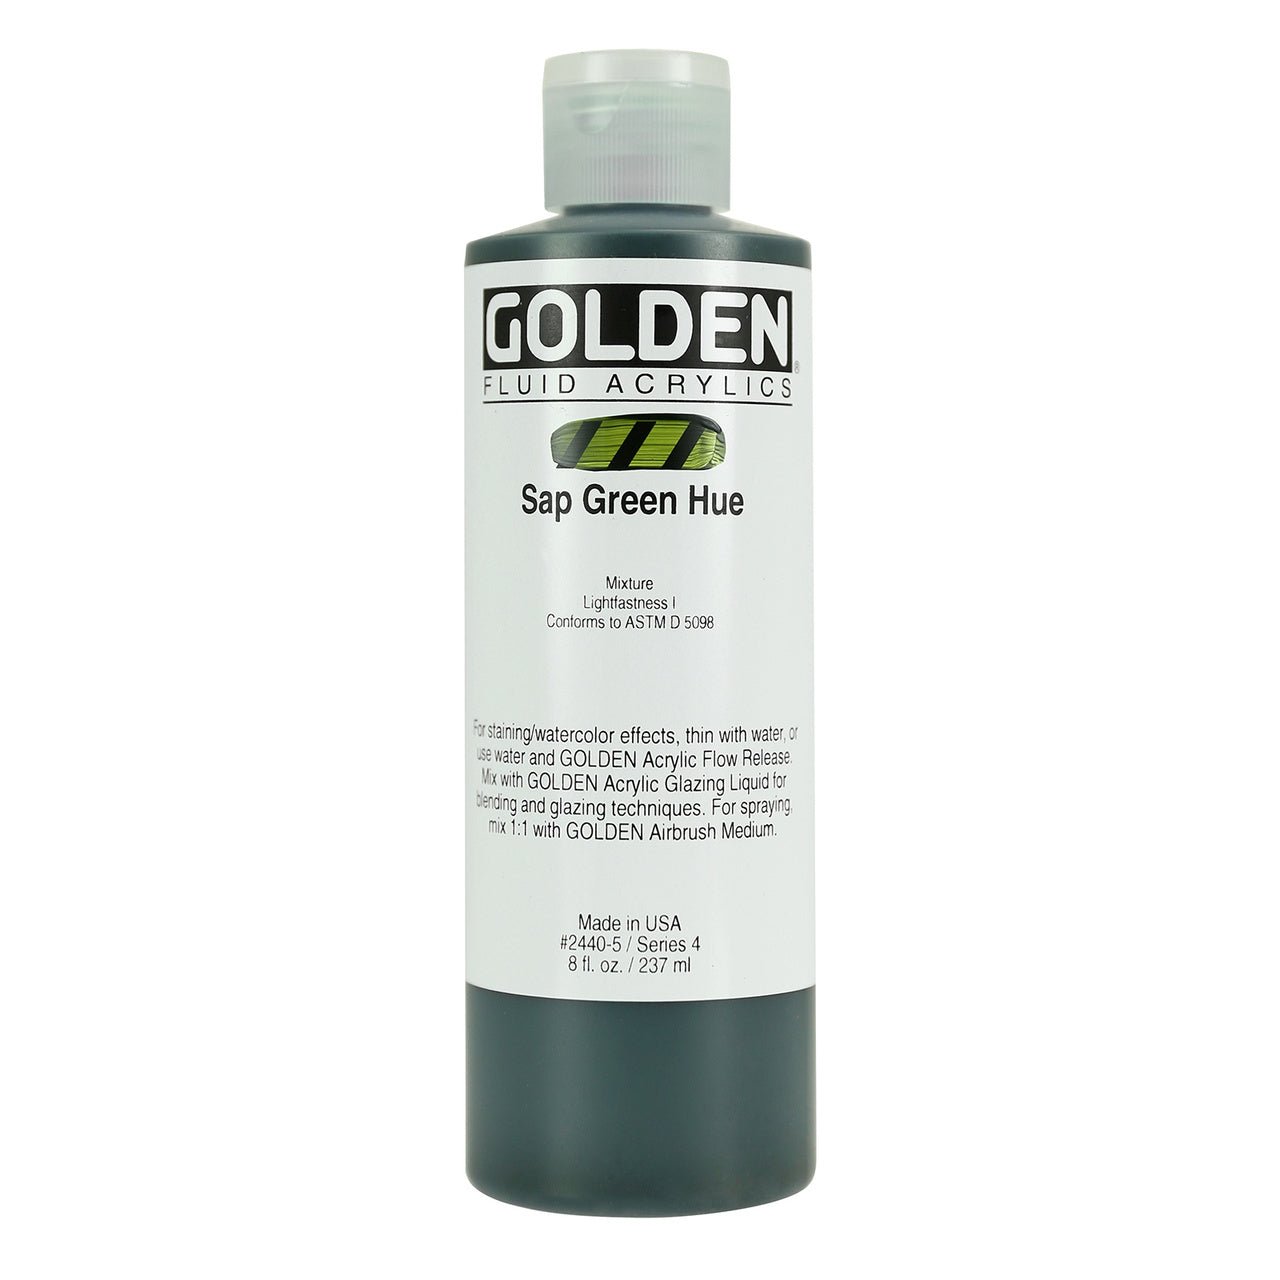 Golden Fluid Acrylic Sap Green Hue 8 oz - merriartist.com